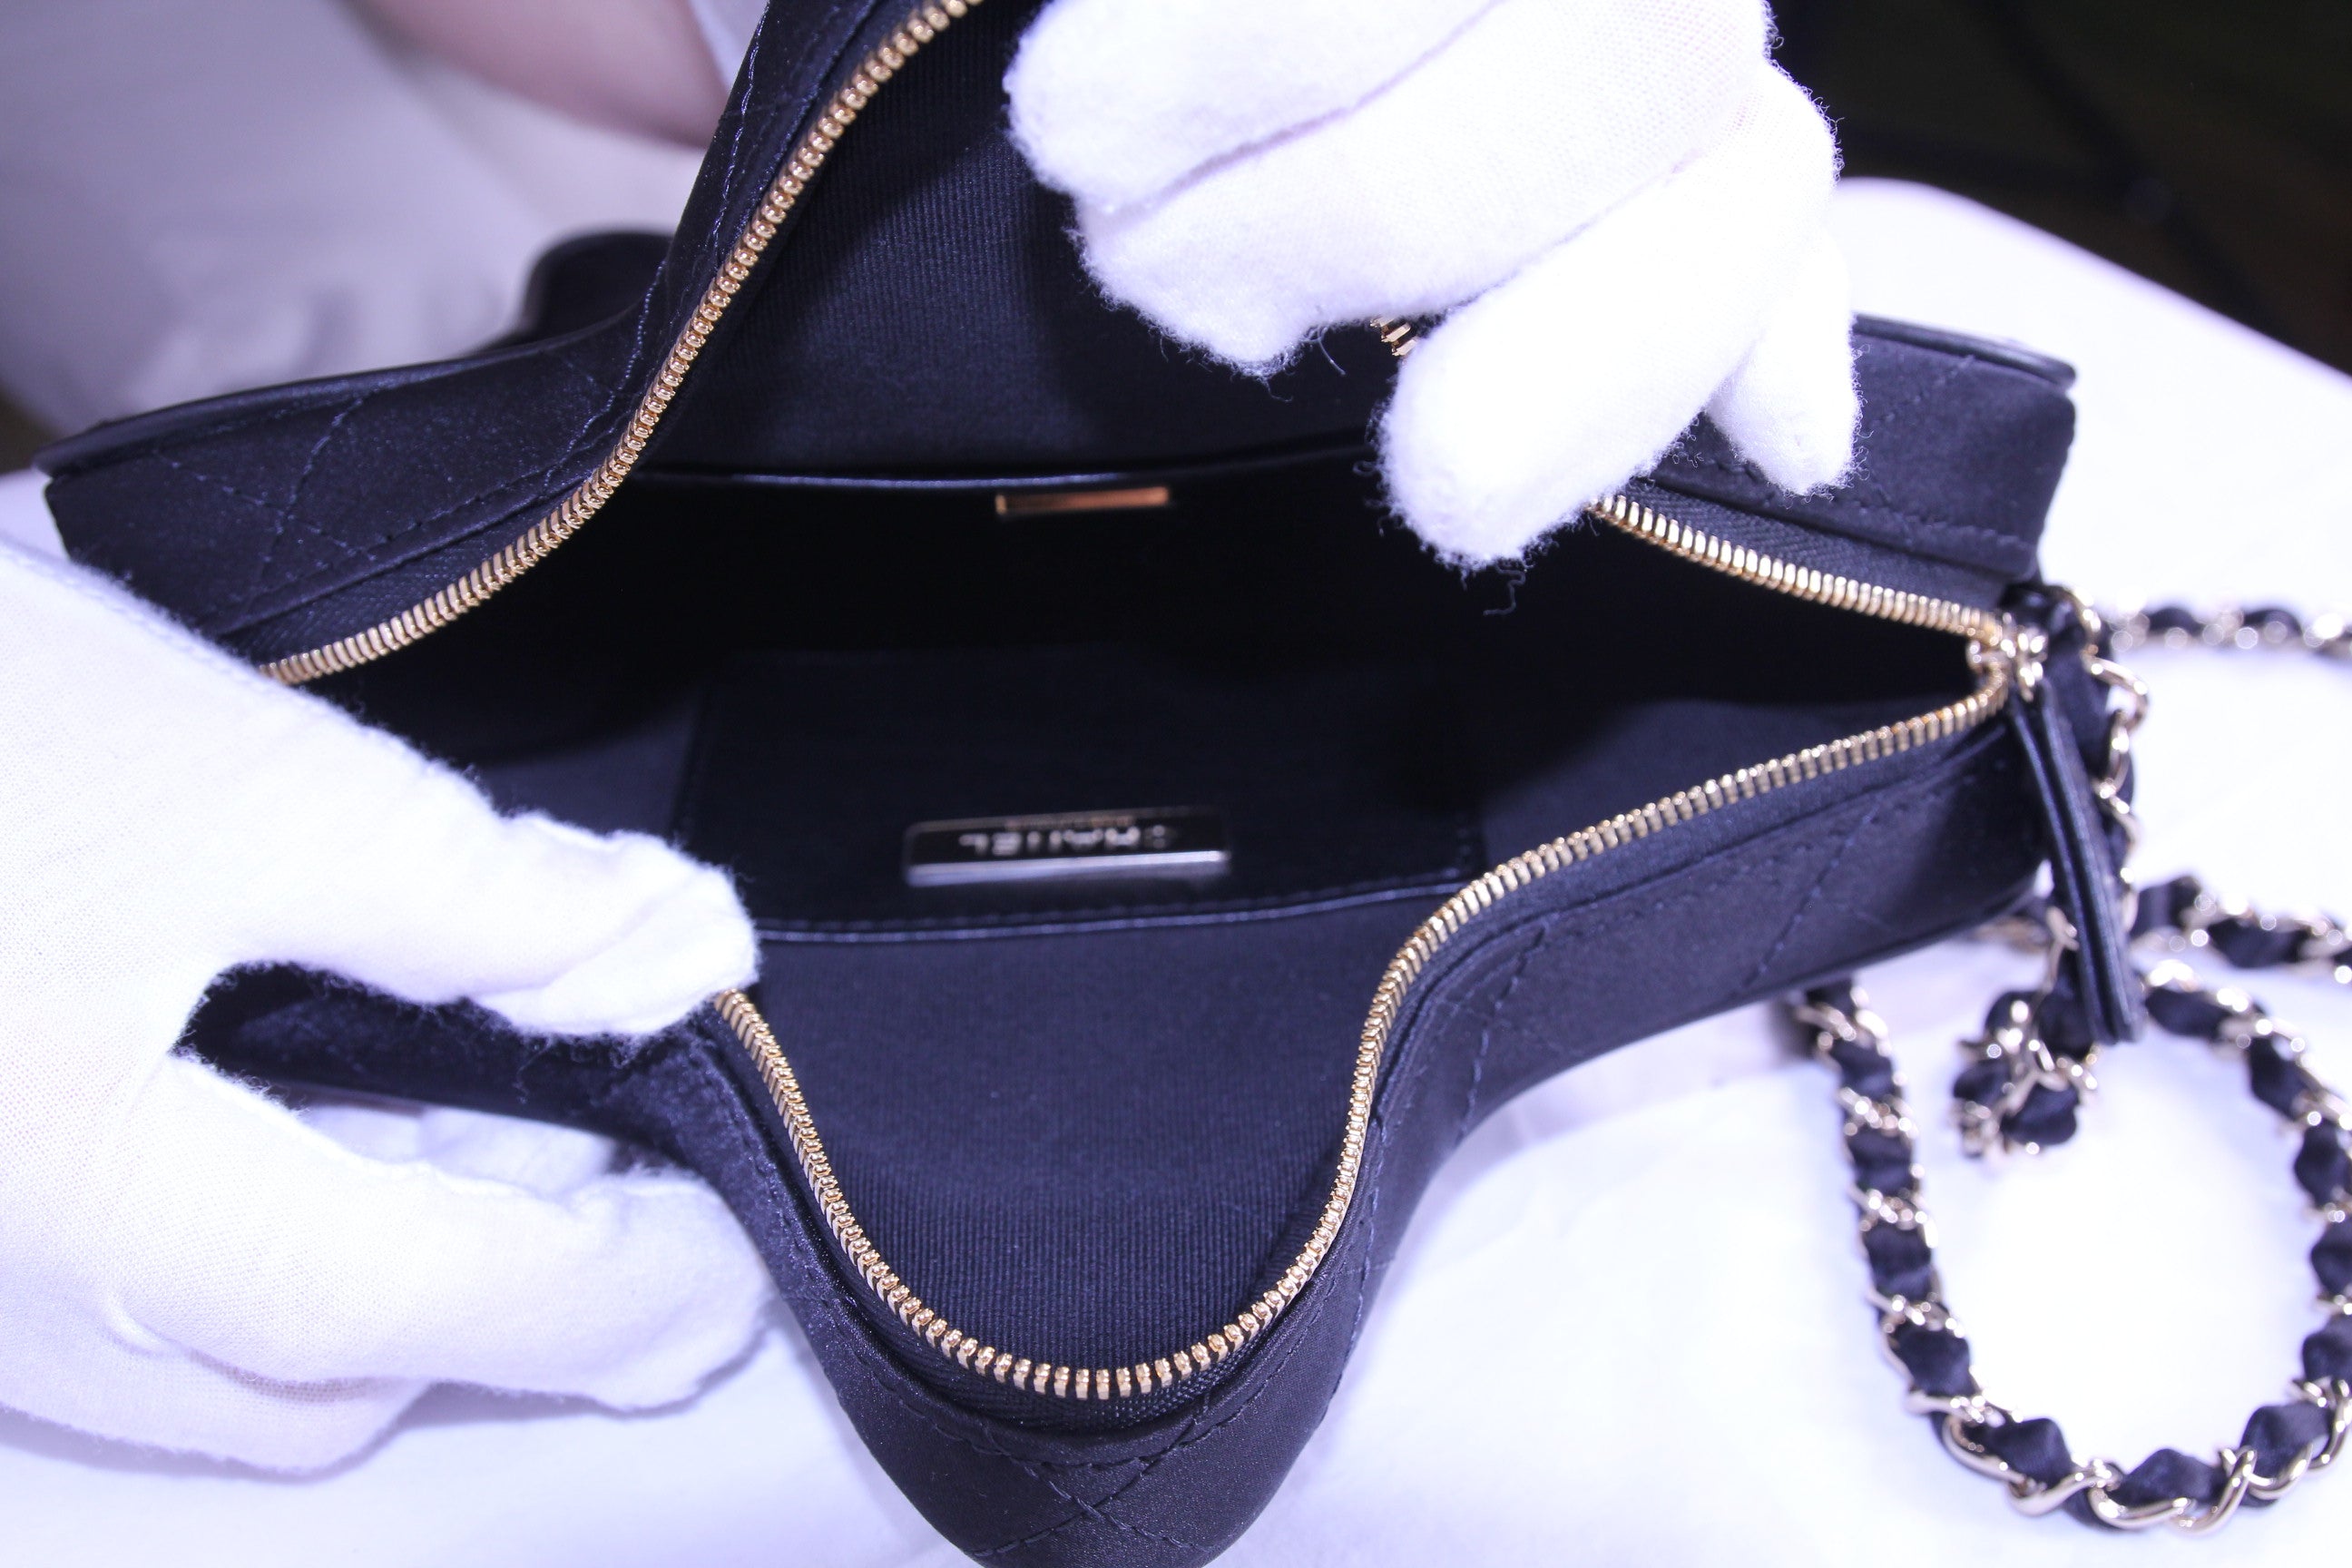 Inside of Chanel star handbag in finished in black satin